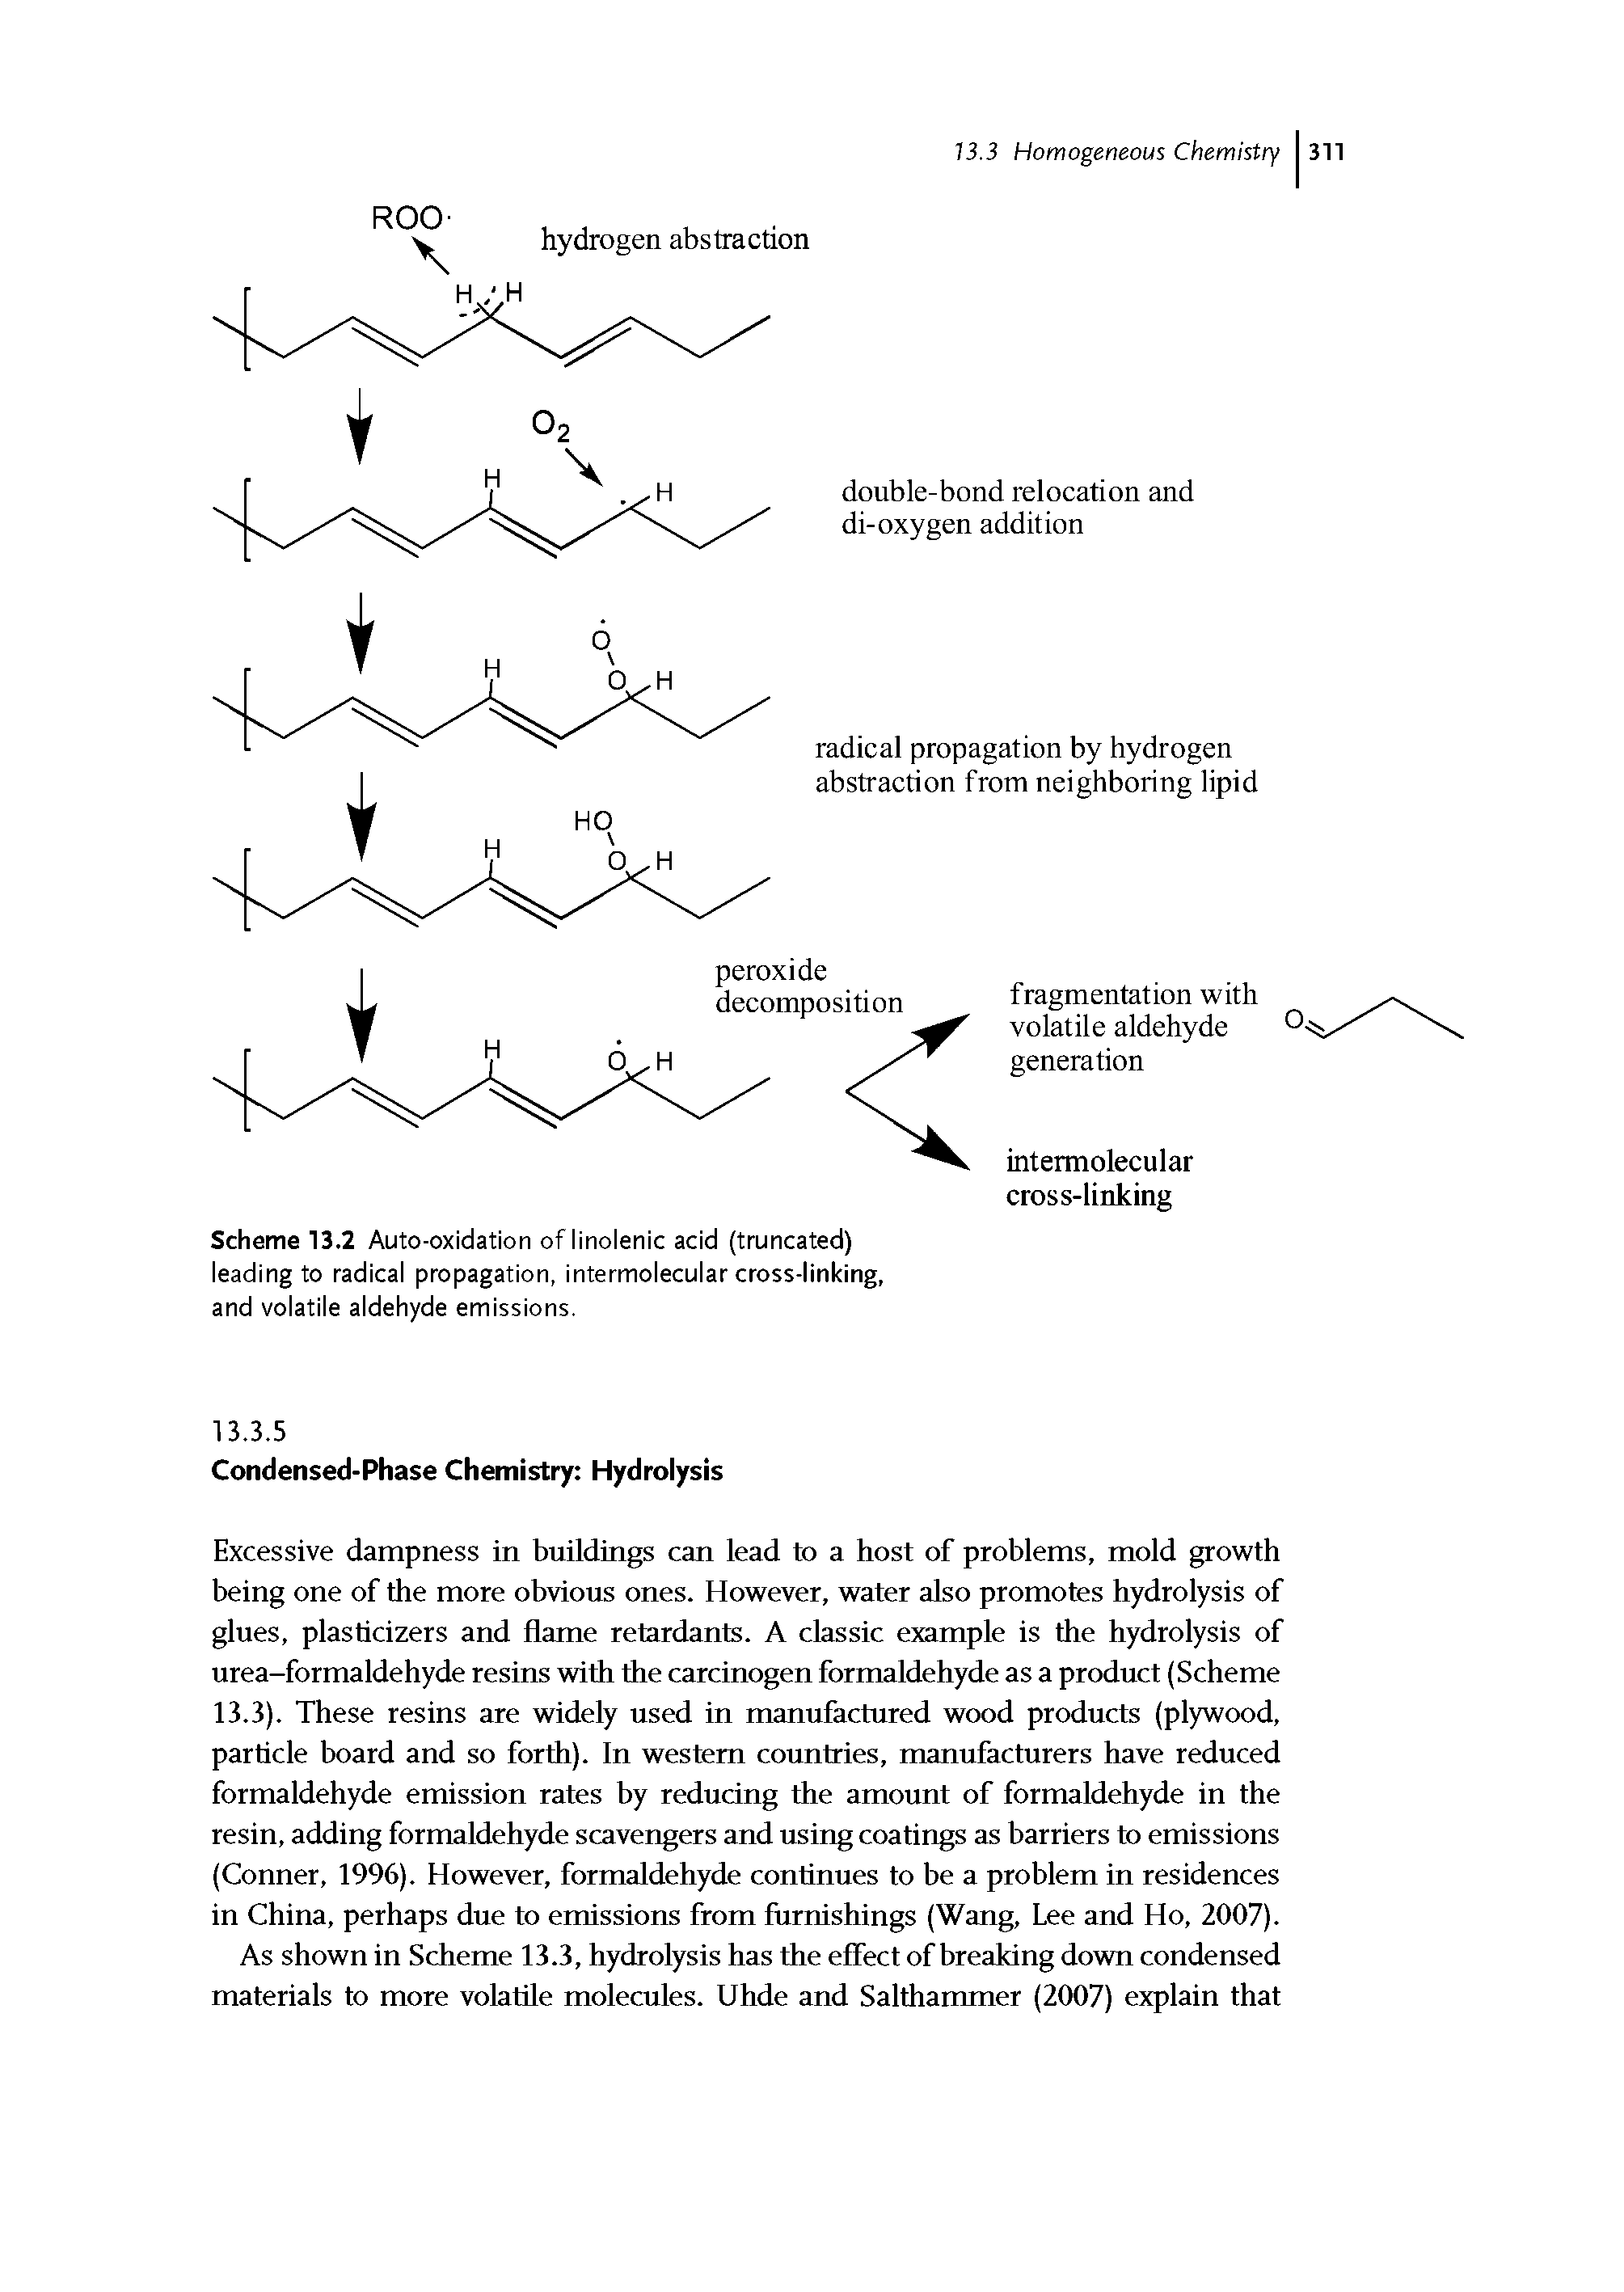 Scheme 13.2 Auto-oxidation of linolenic acid (truncated) leading to radical propagation, intermolecular cross-linking, and volatile aldehyde emissions.